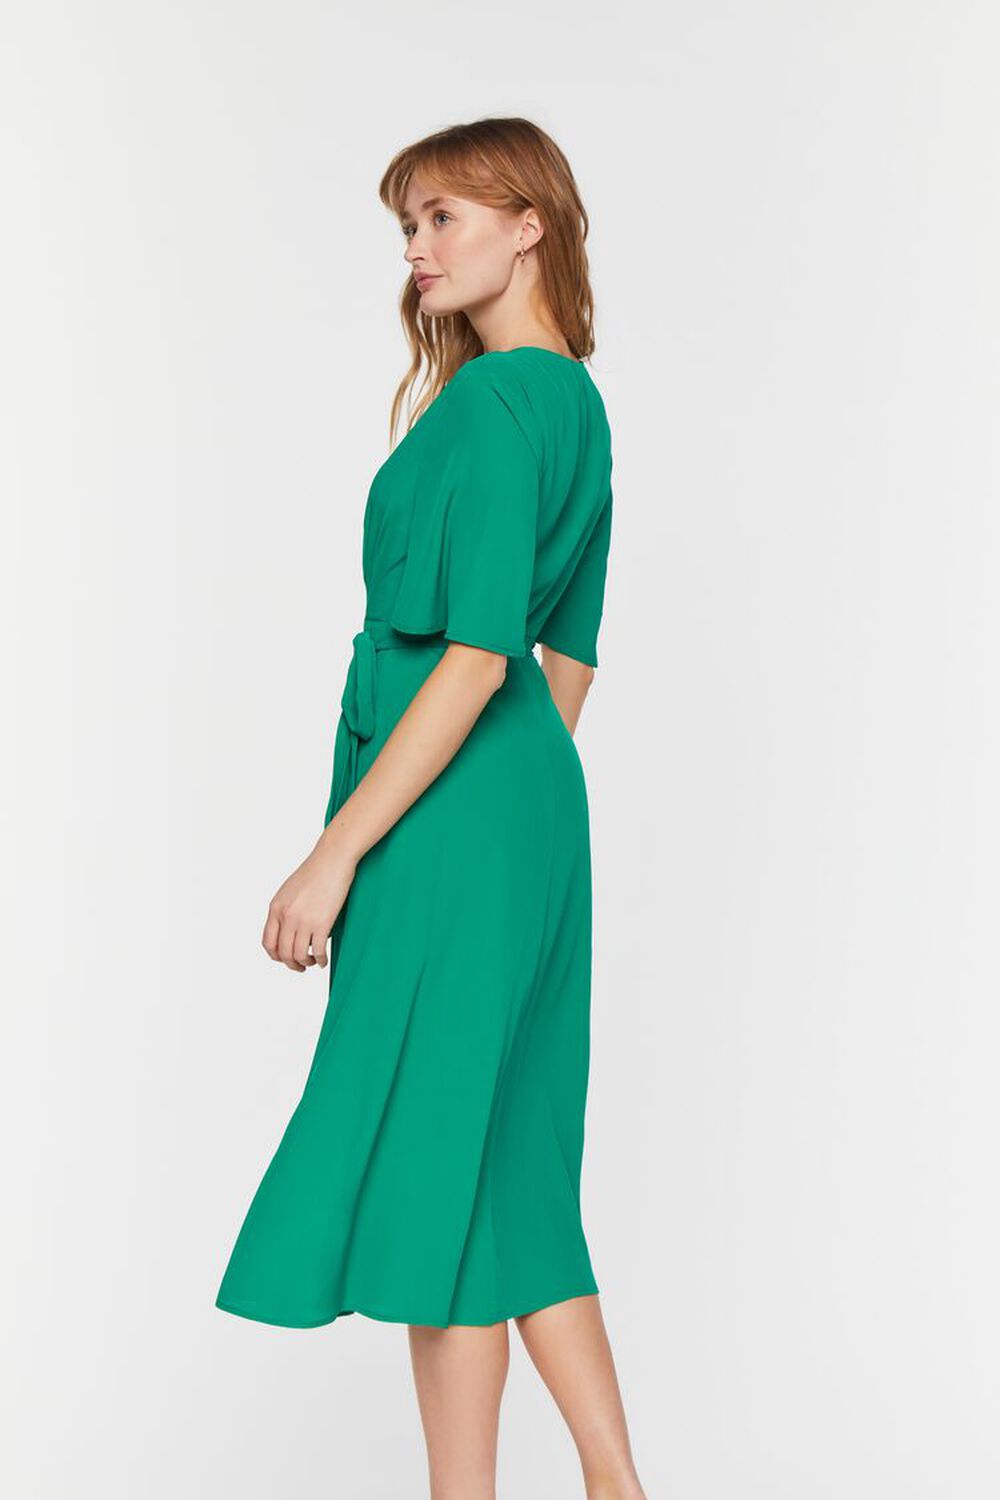 GREEN Crepe Midi Wrap Dress, image 3